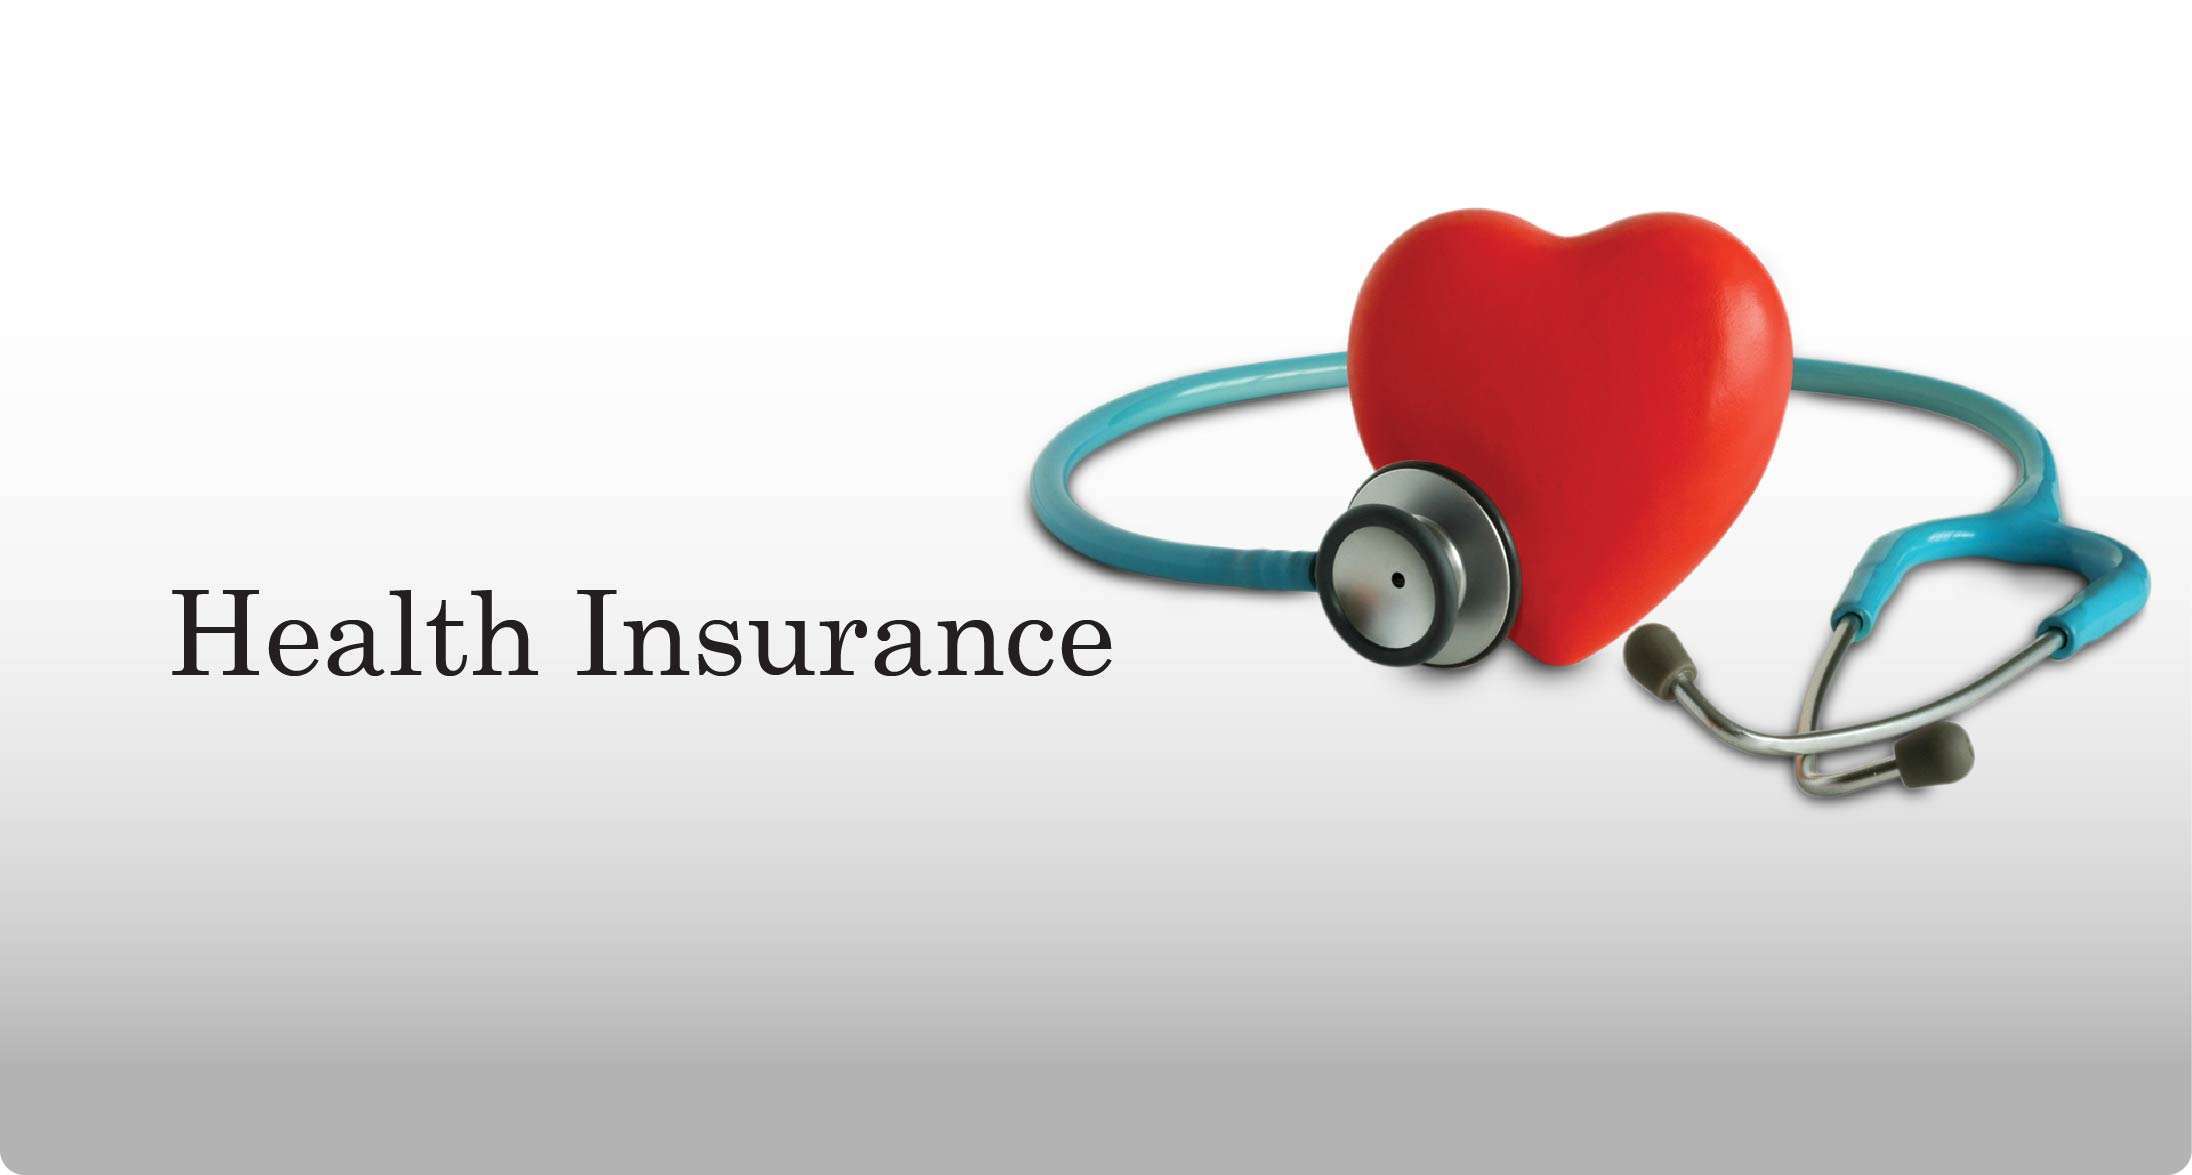 Health Insurance Hd Wallpaper - Health Insurance Images Hd , HD Wallpaper & Backgrounds